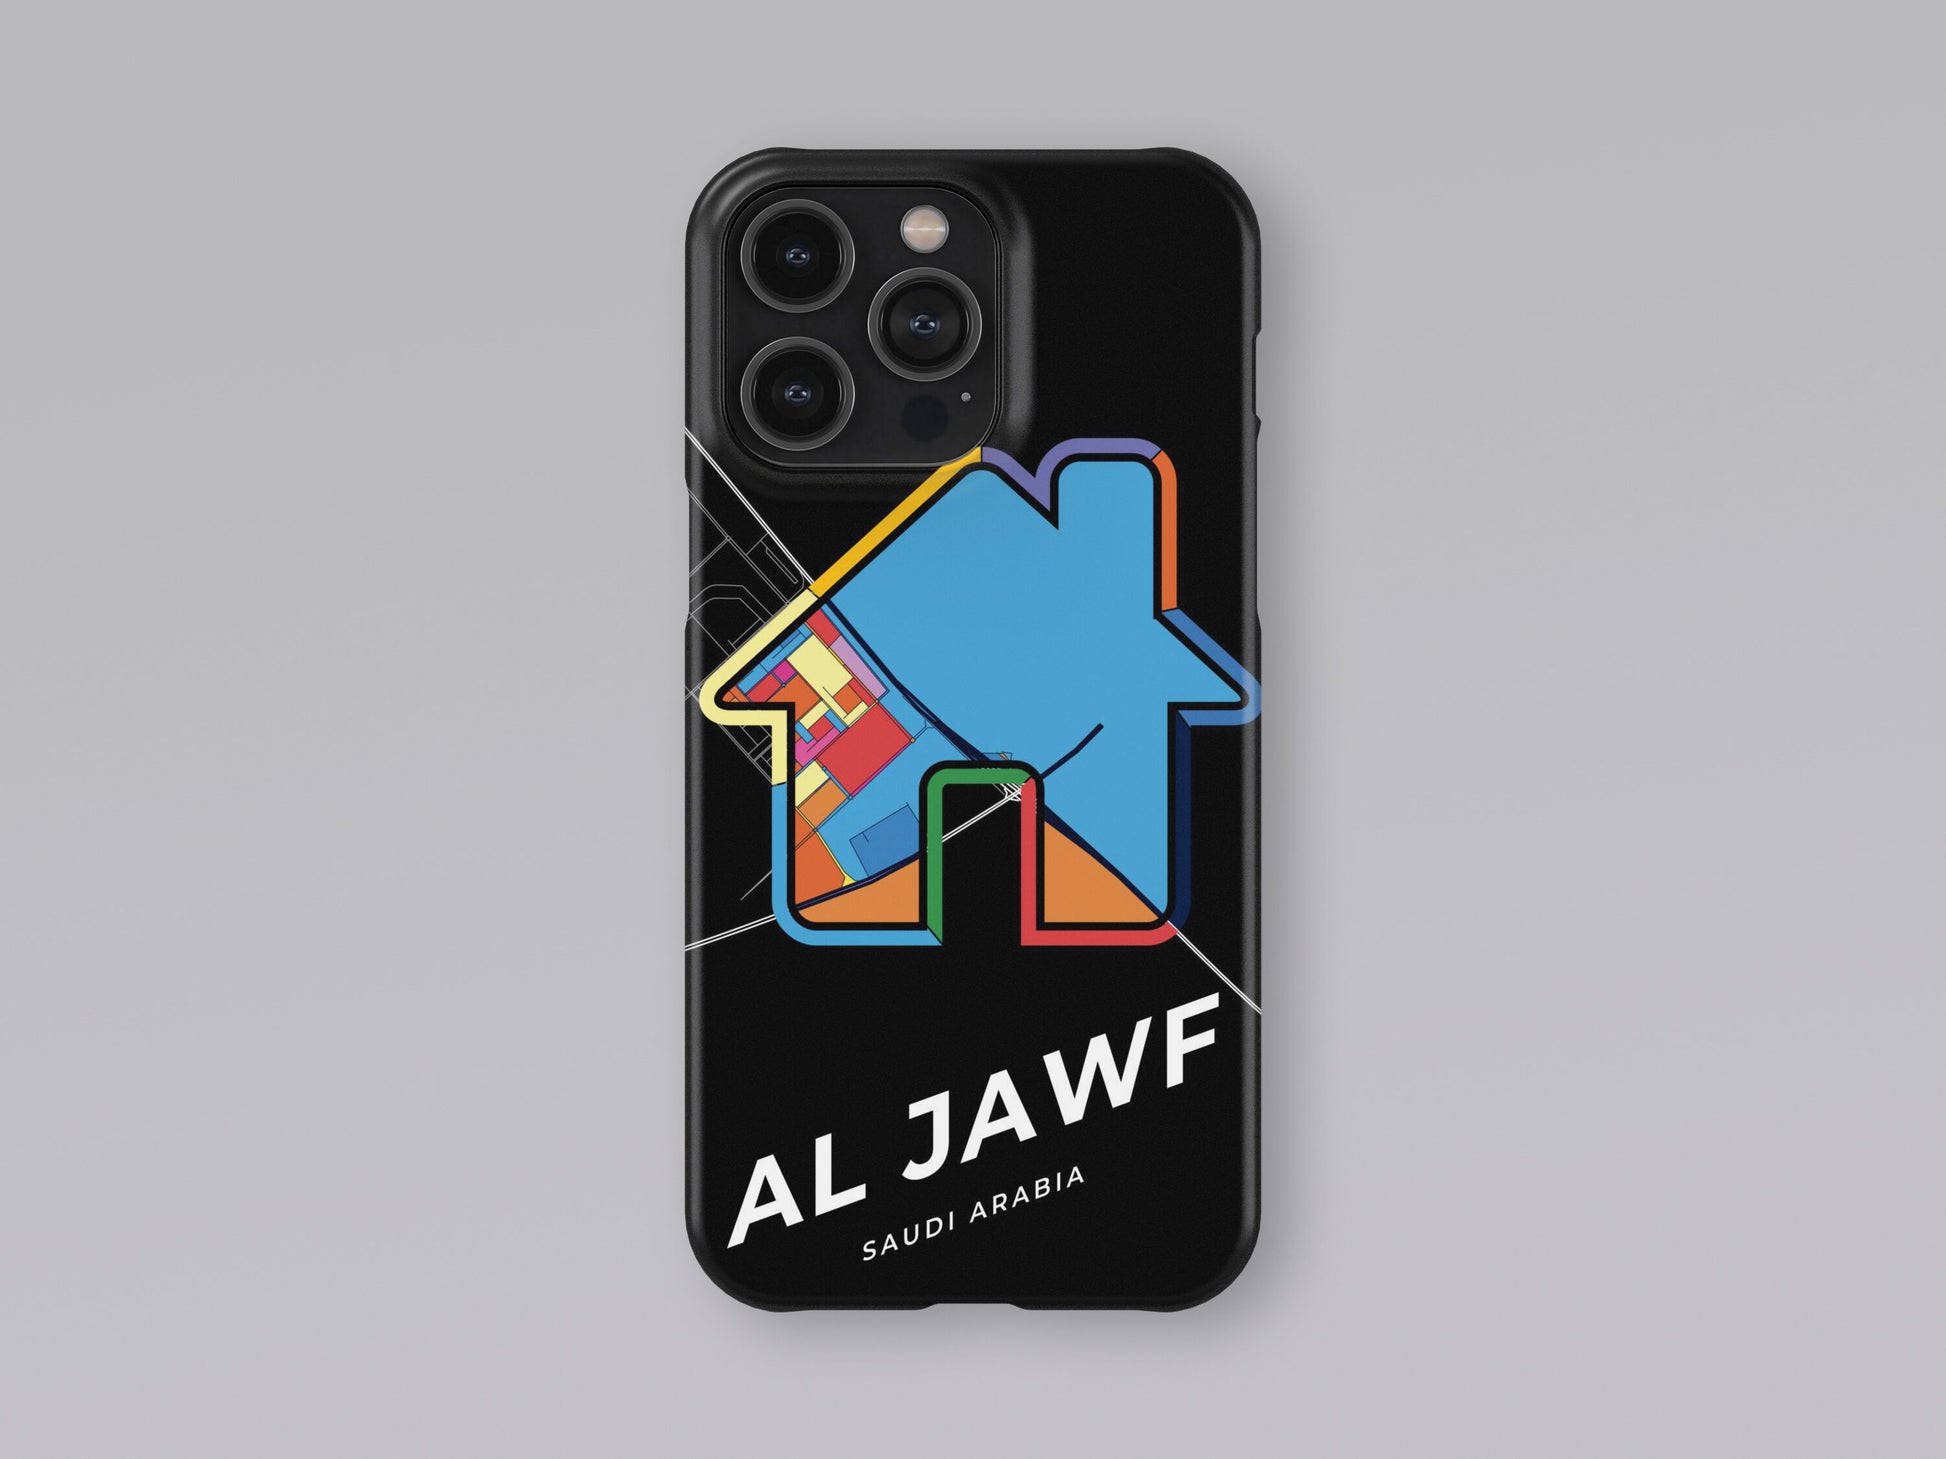 Al Jawf Saudi Arabia slim phone case with colorful icon. Birthday, wedding or housewarming gift. Couple match cases. 3